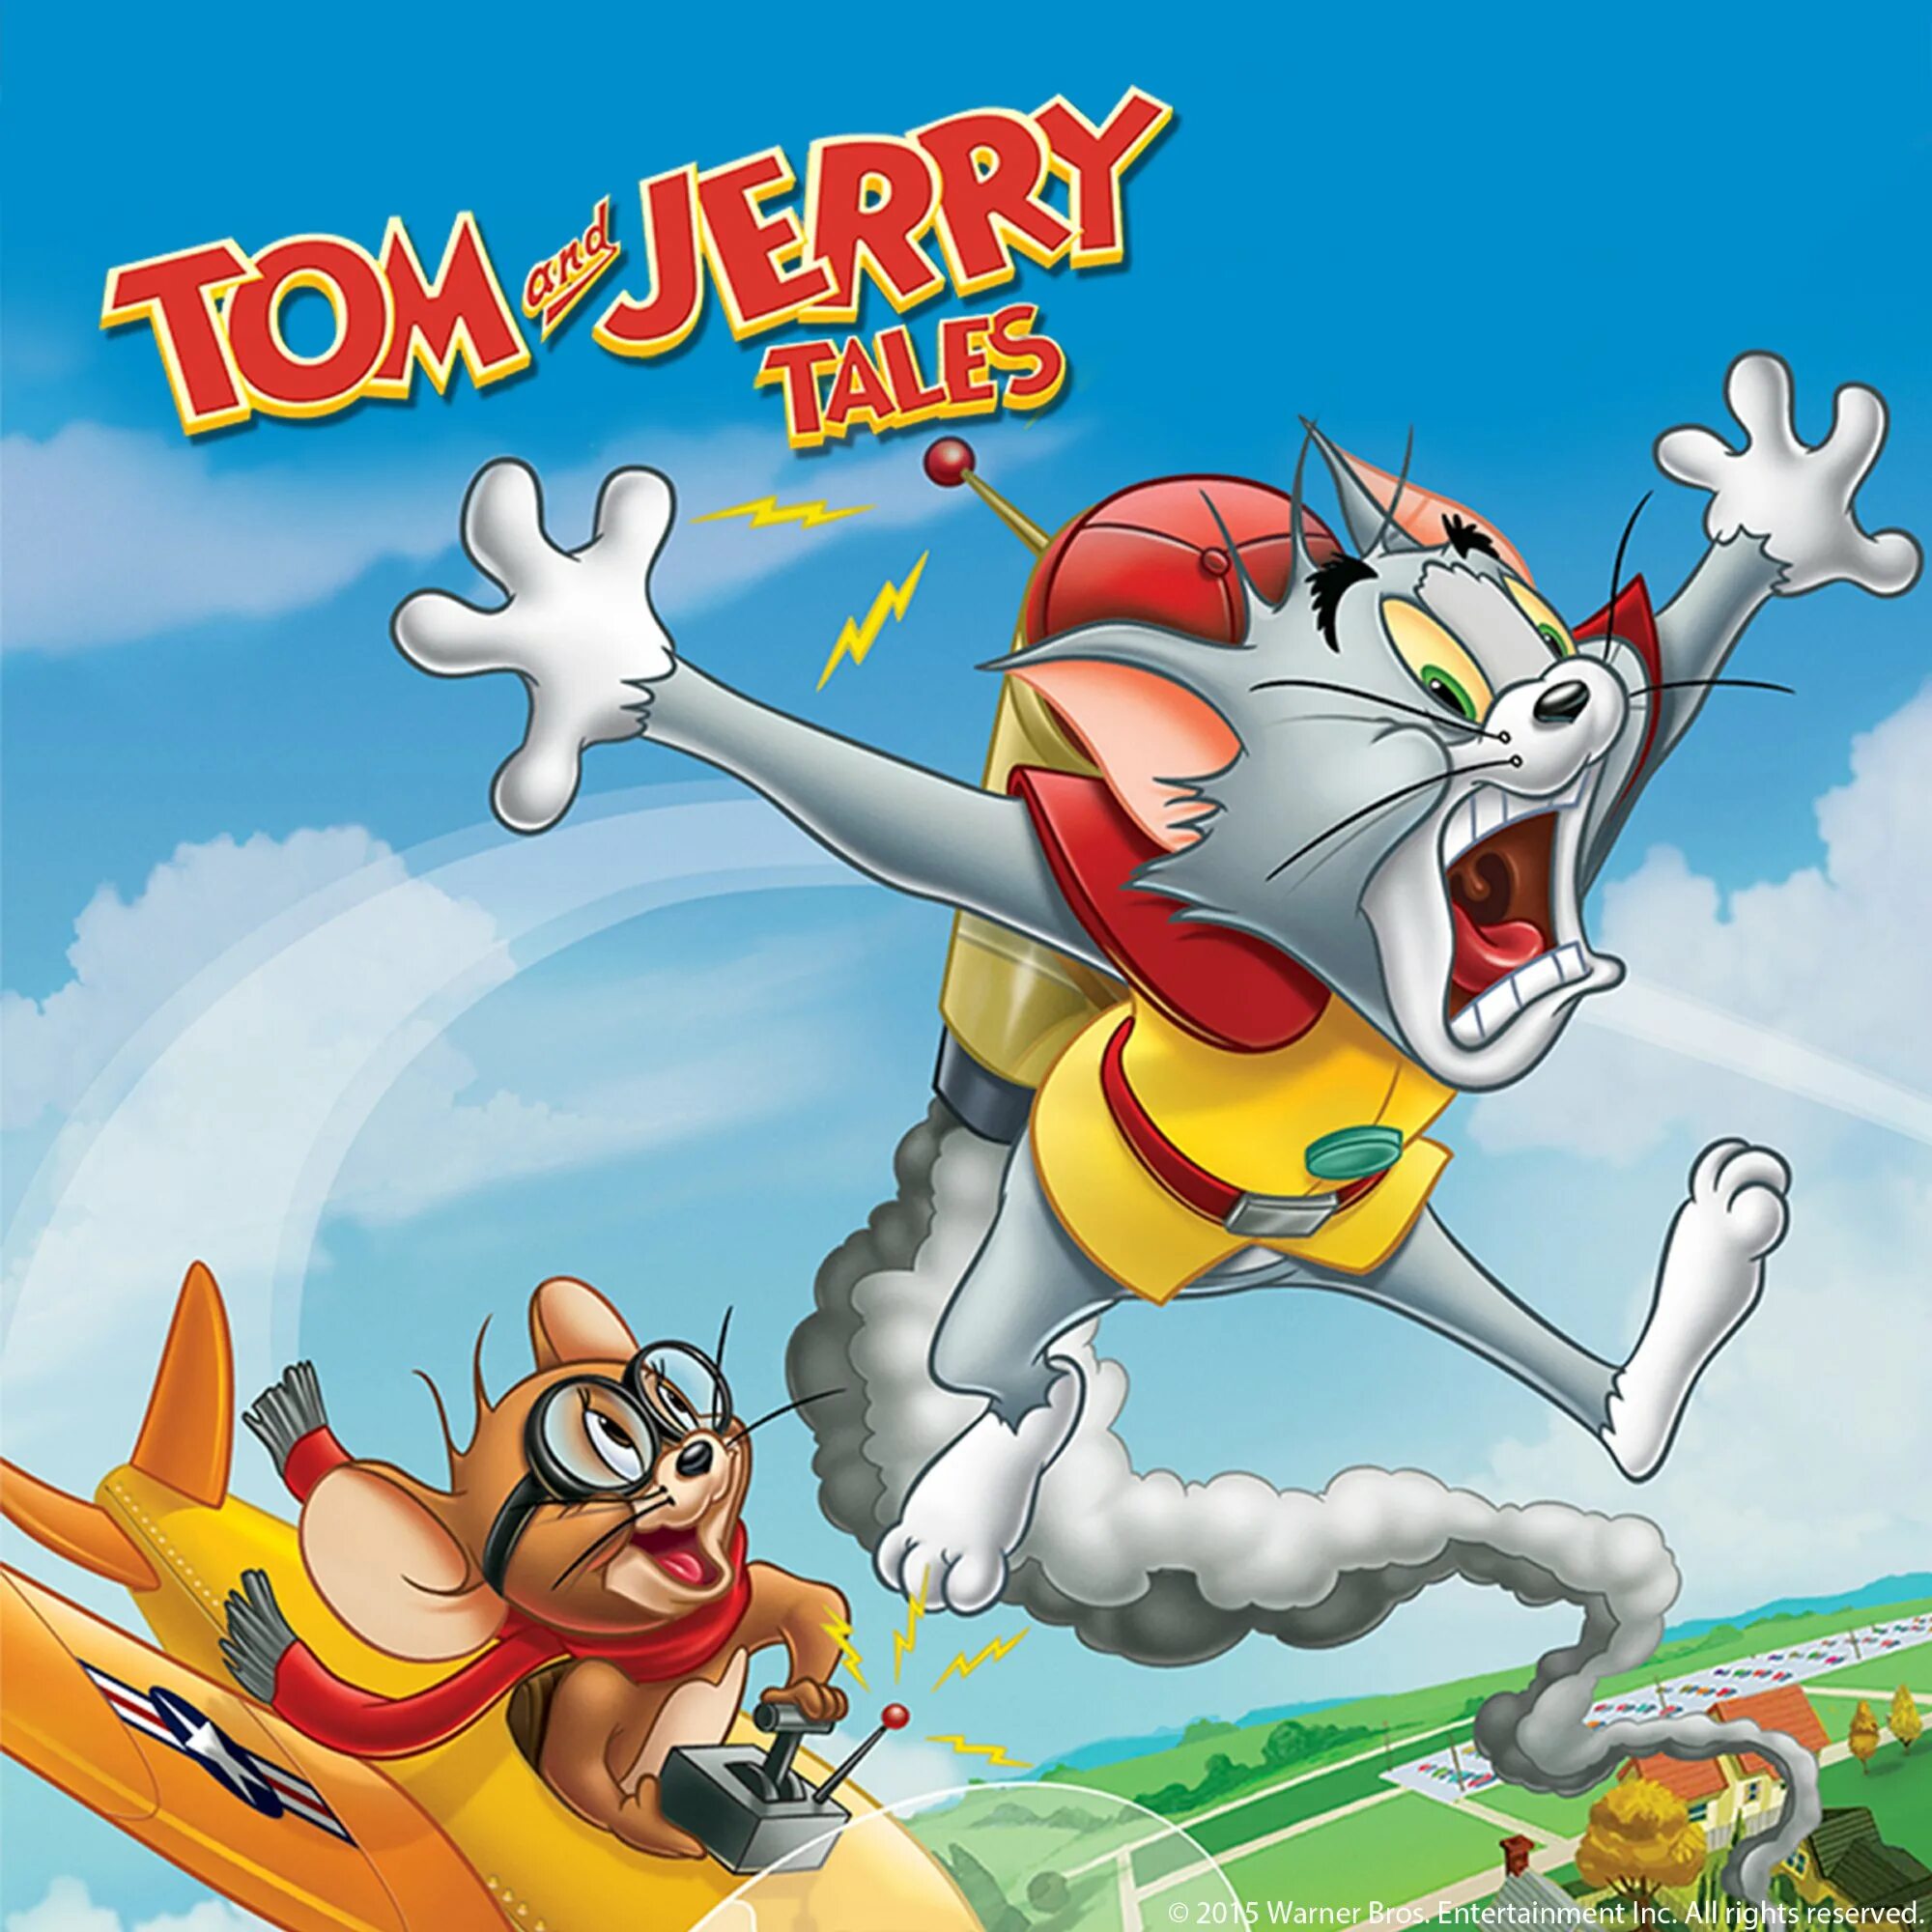 Toms tales. Том и Джерри Талес. Постер "том и Джерри". Том и Джерри сказки 2006.